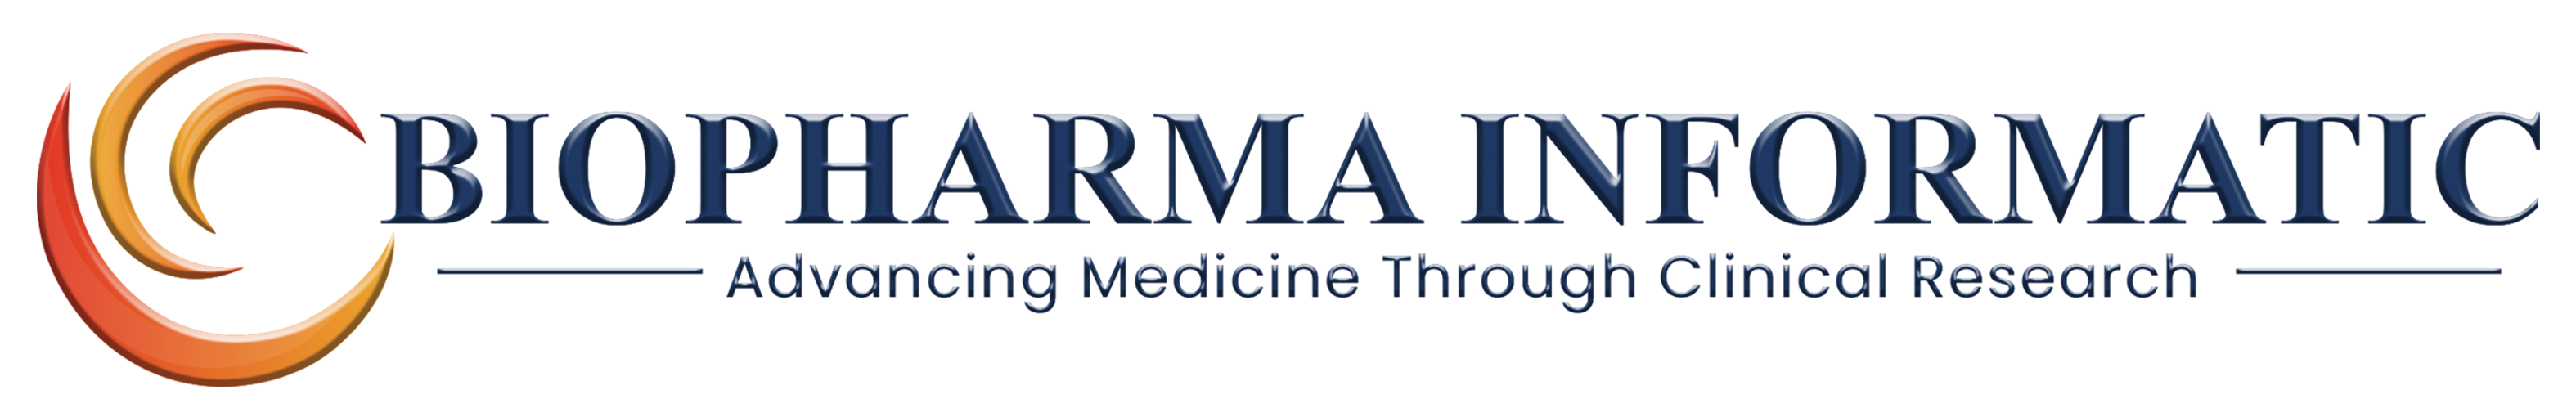 Biopharma Informatic Logo